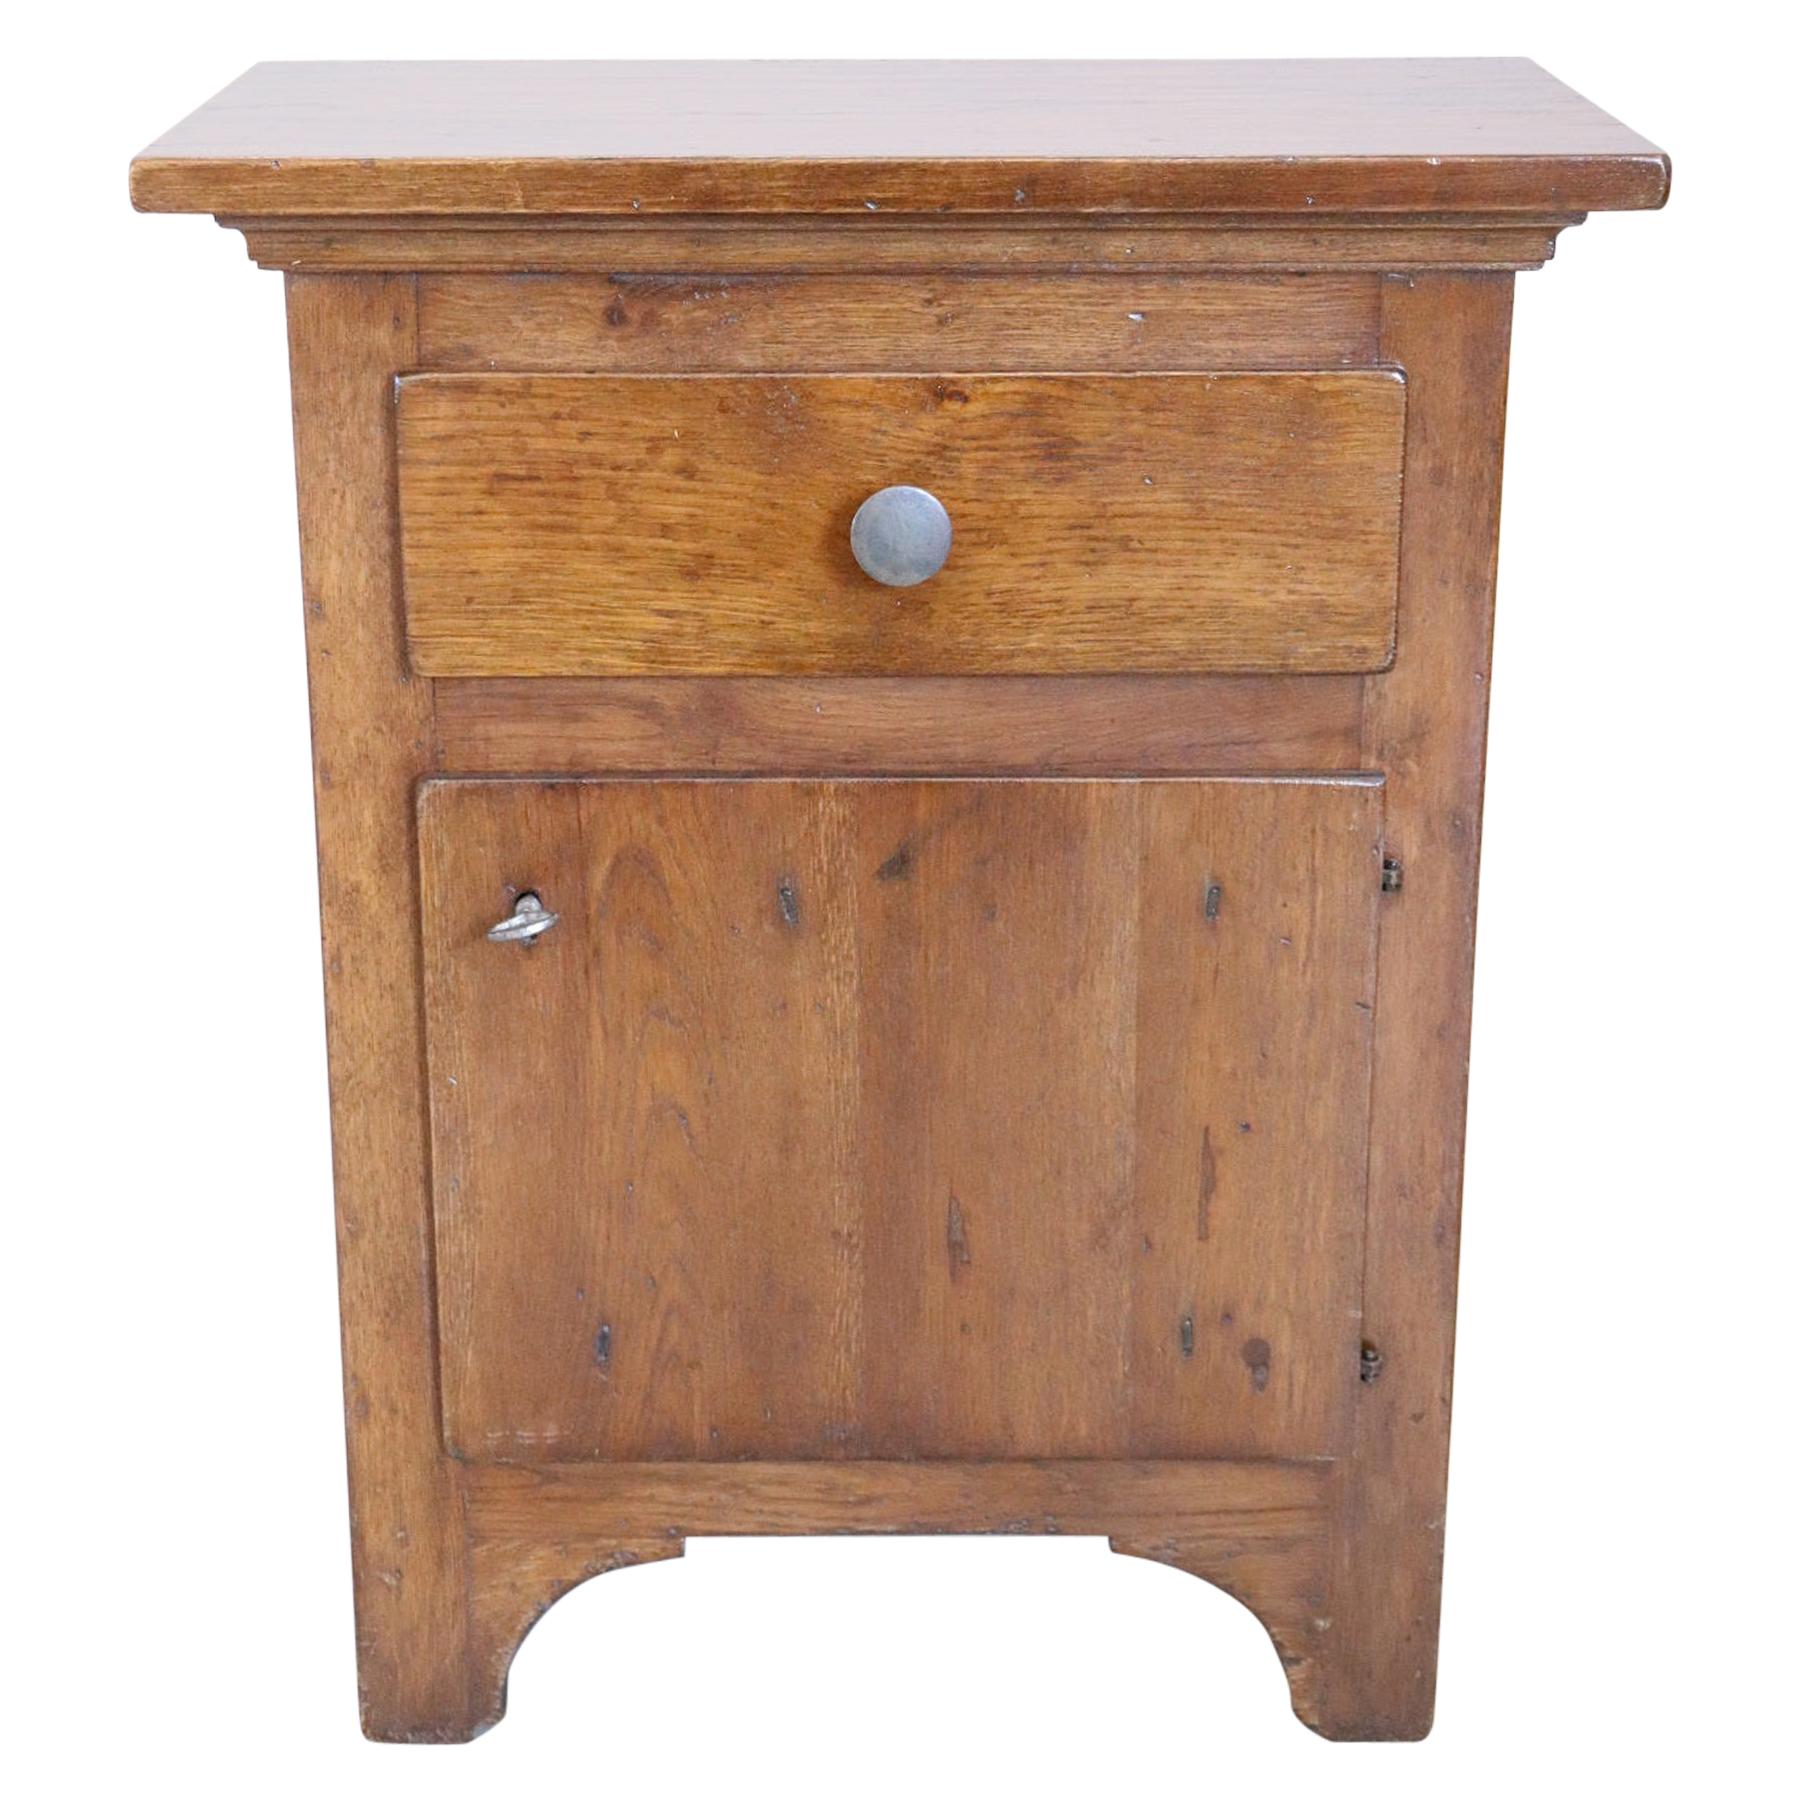 Early 20th Century Italian Solid Oak Wood Rustic Nightstand